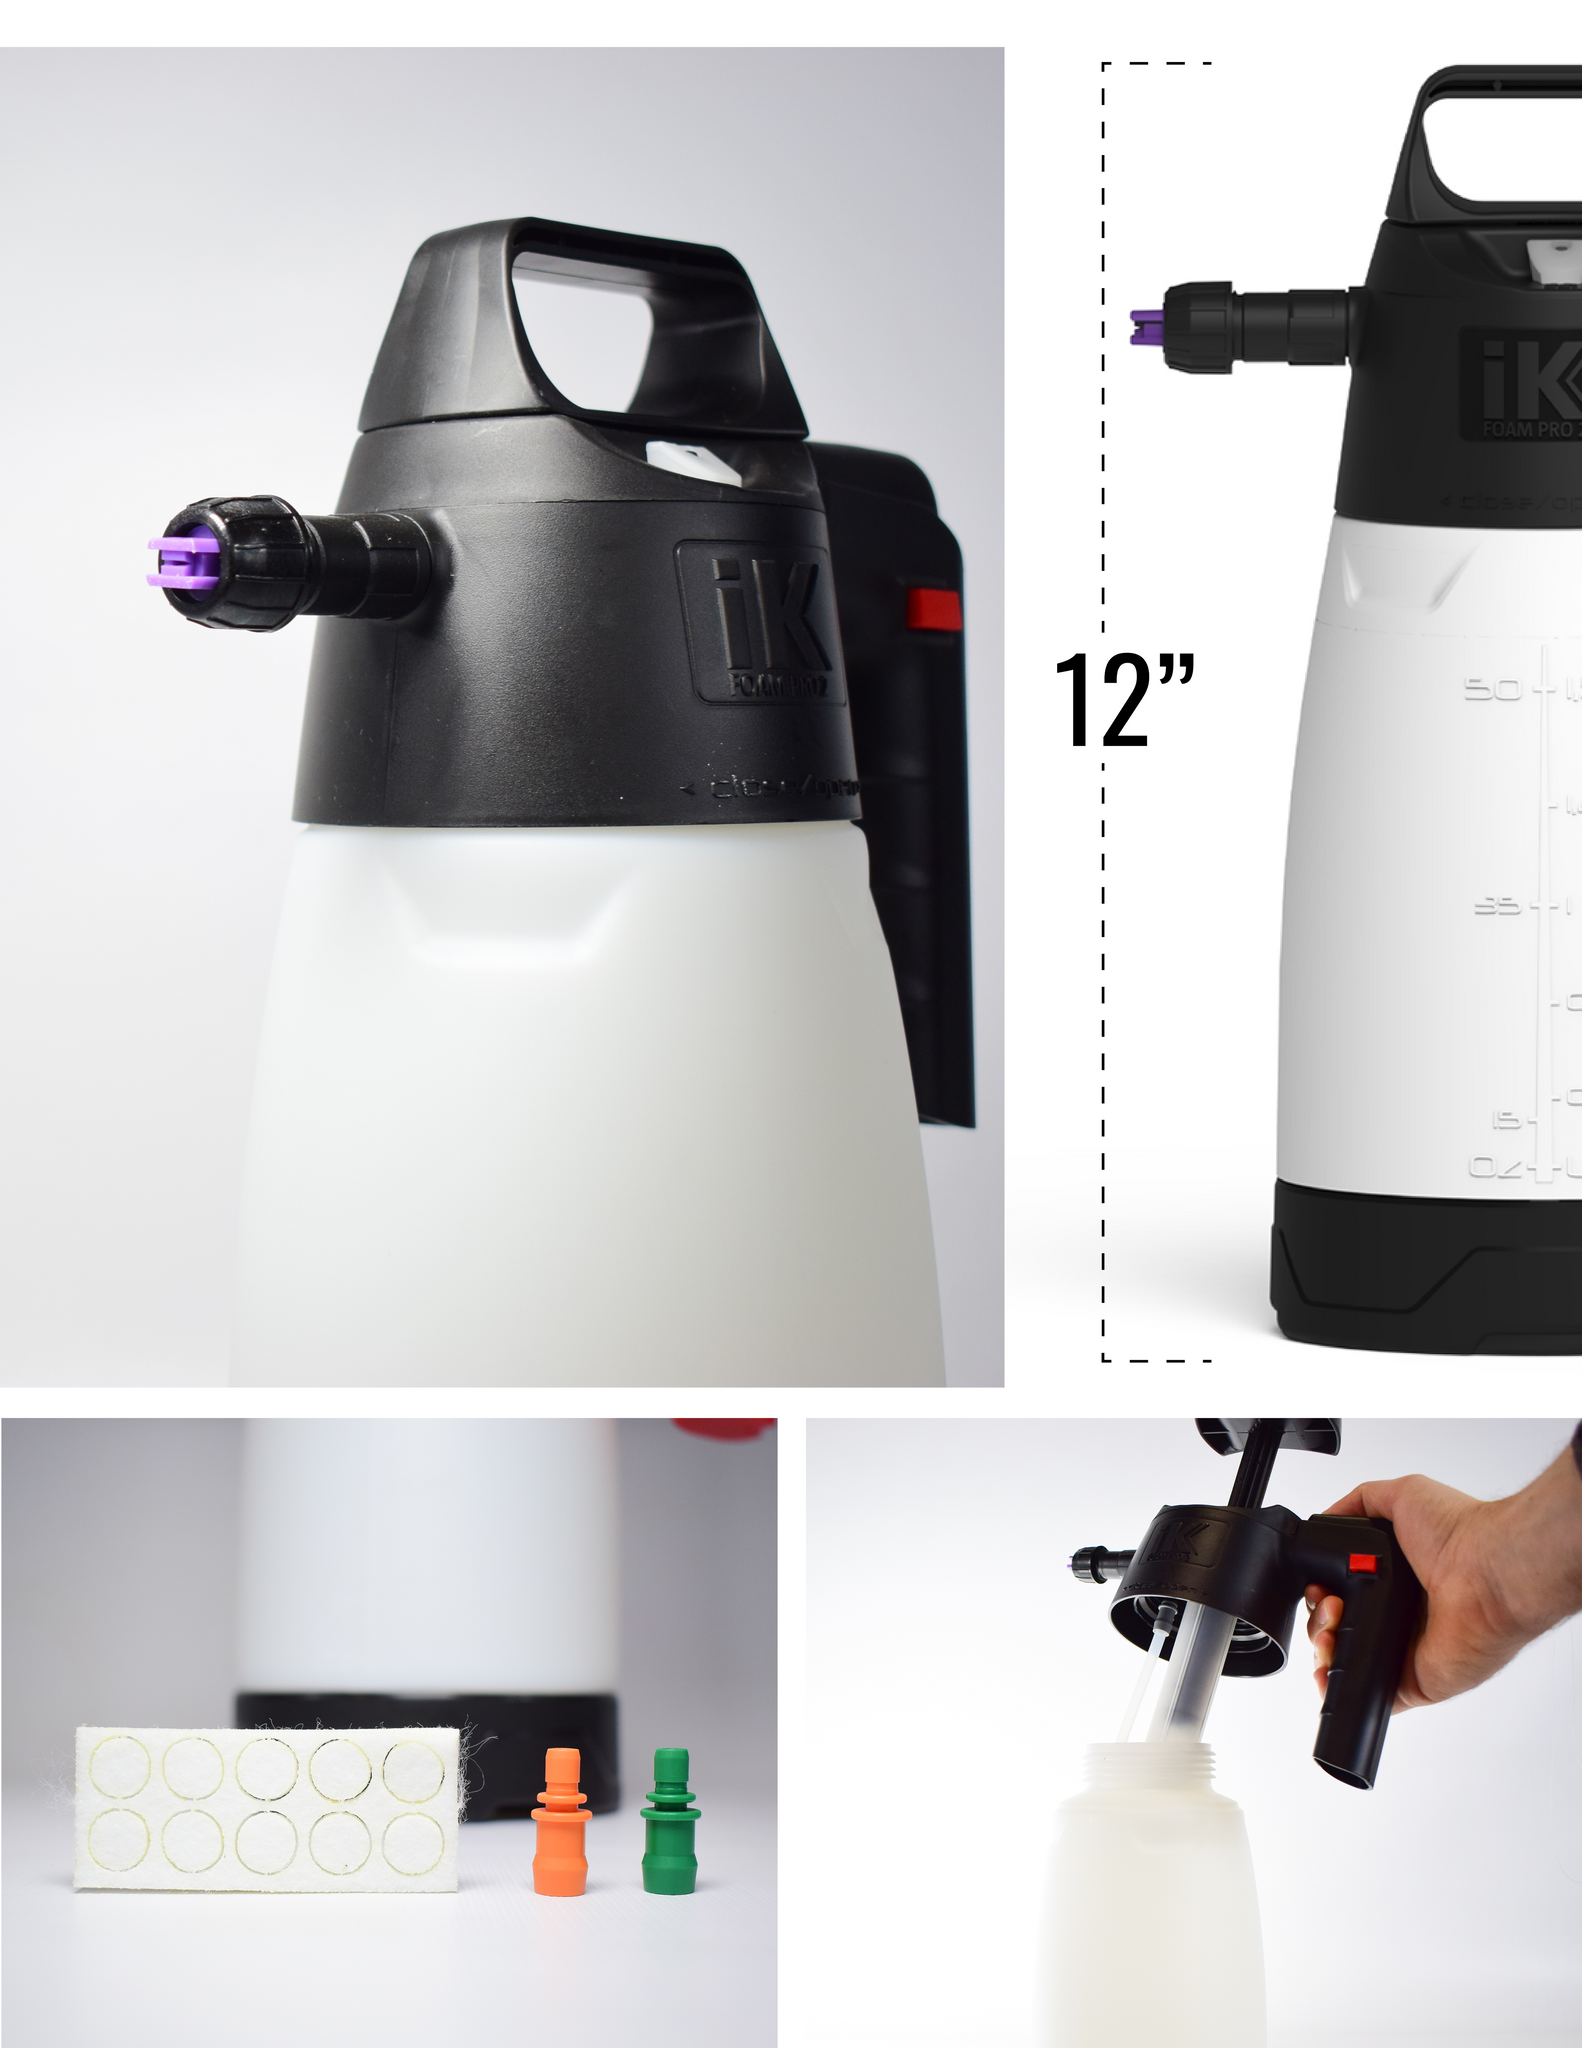  iK Foam PRO 2 Pump Sprayer : Automotive